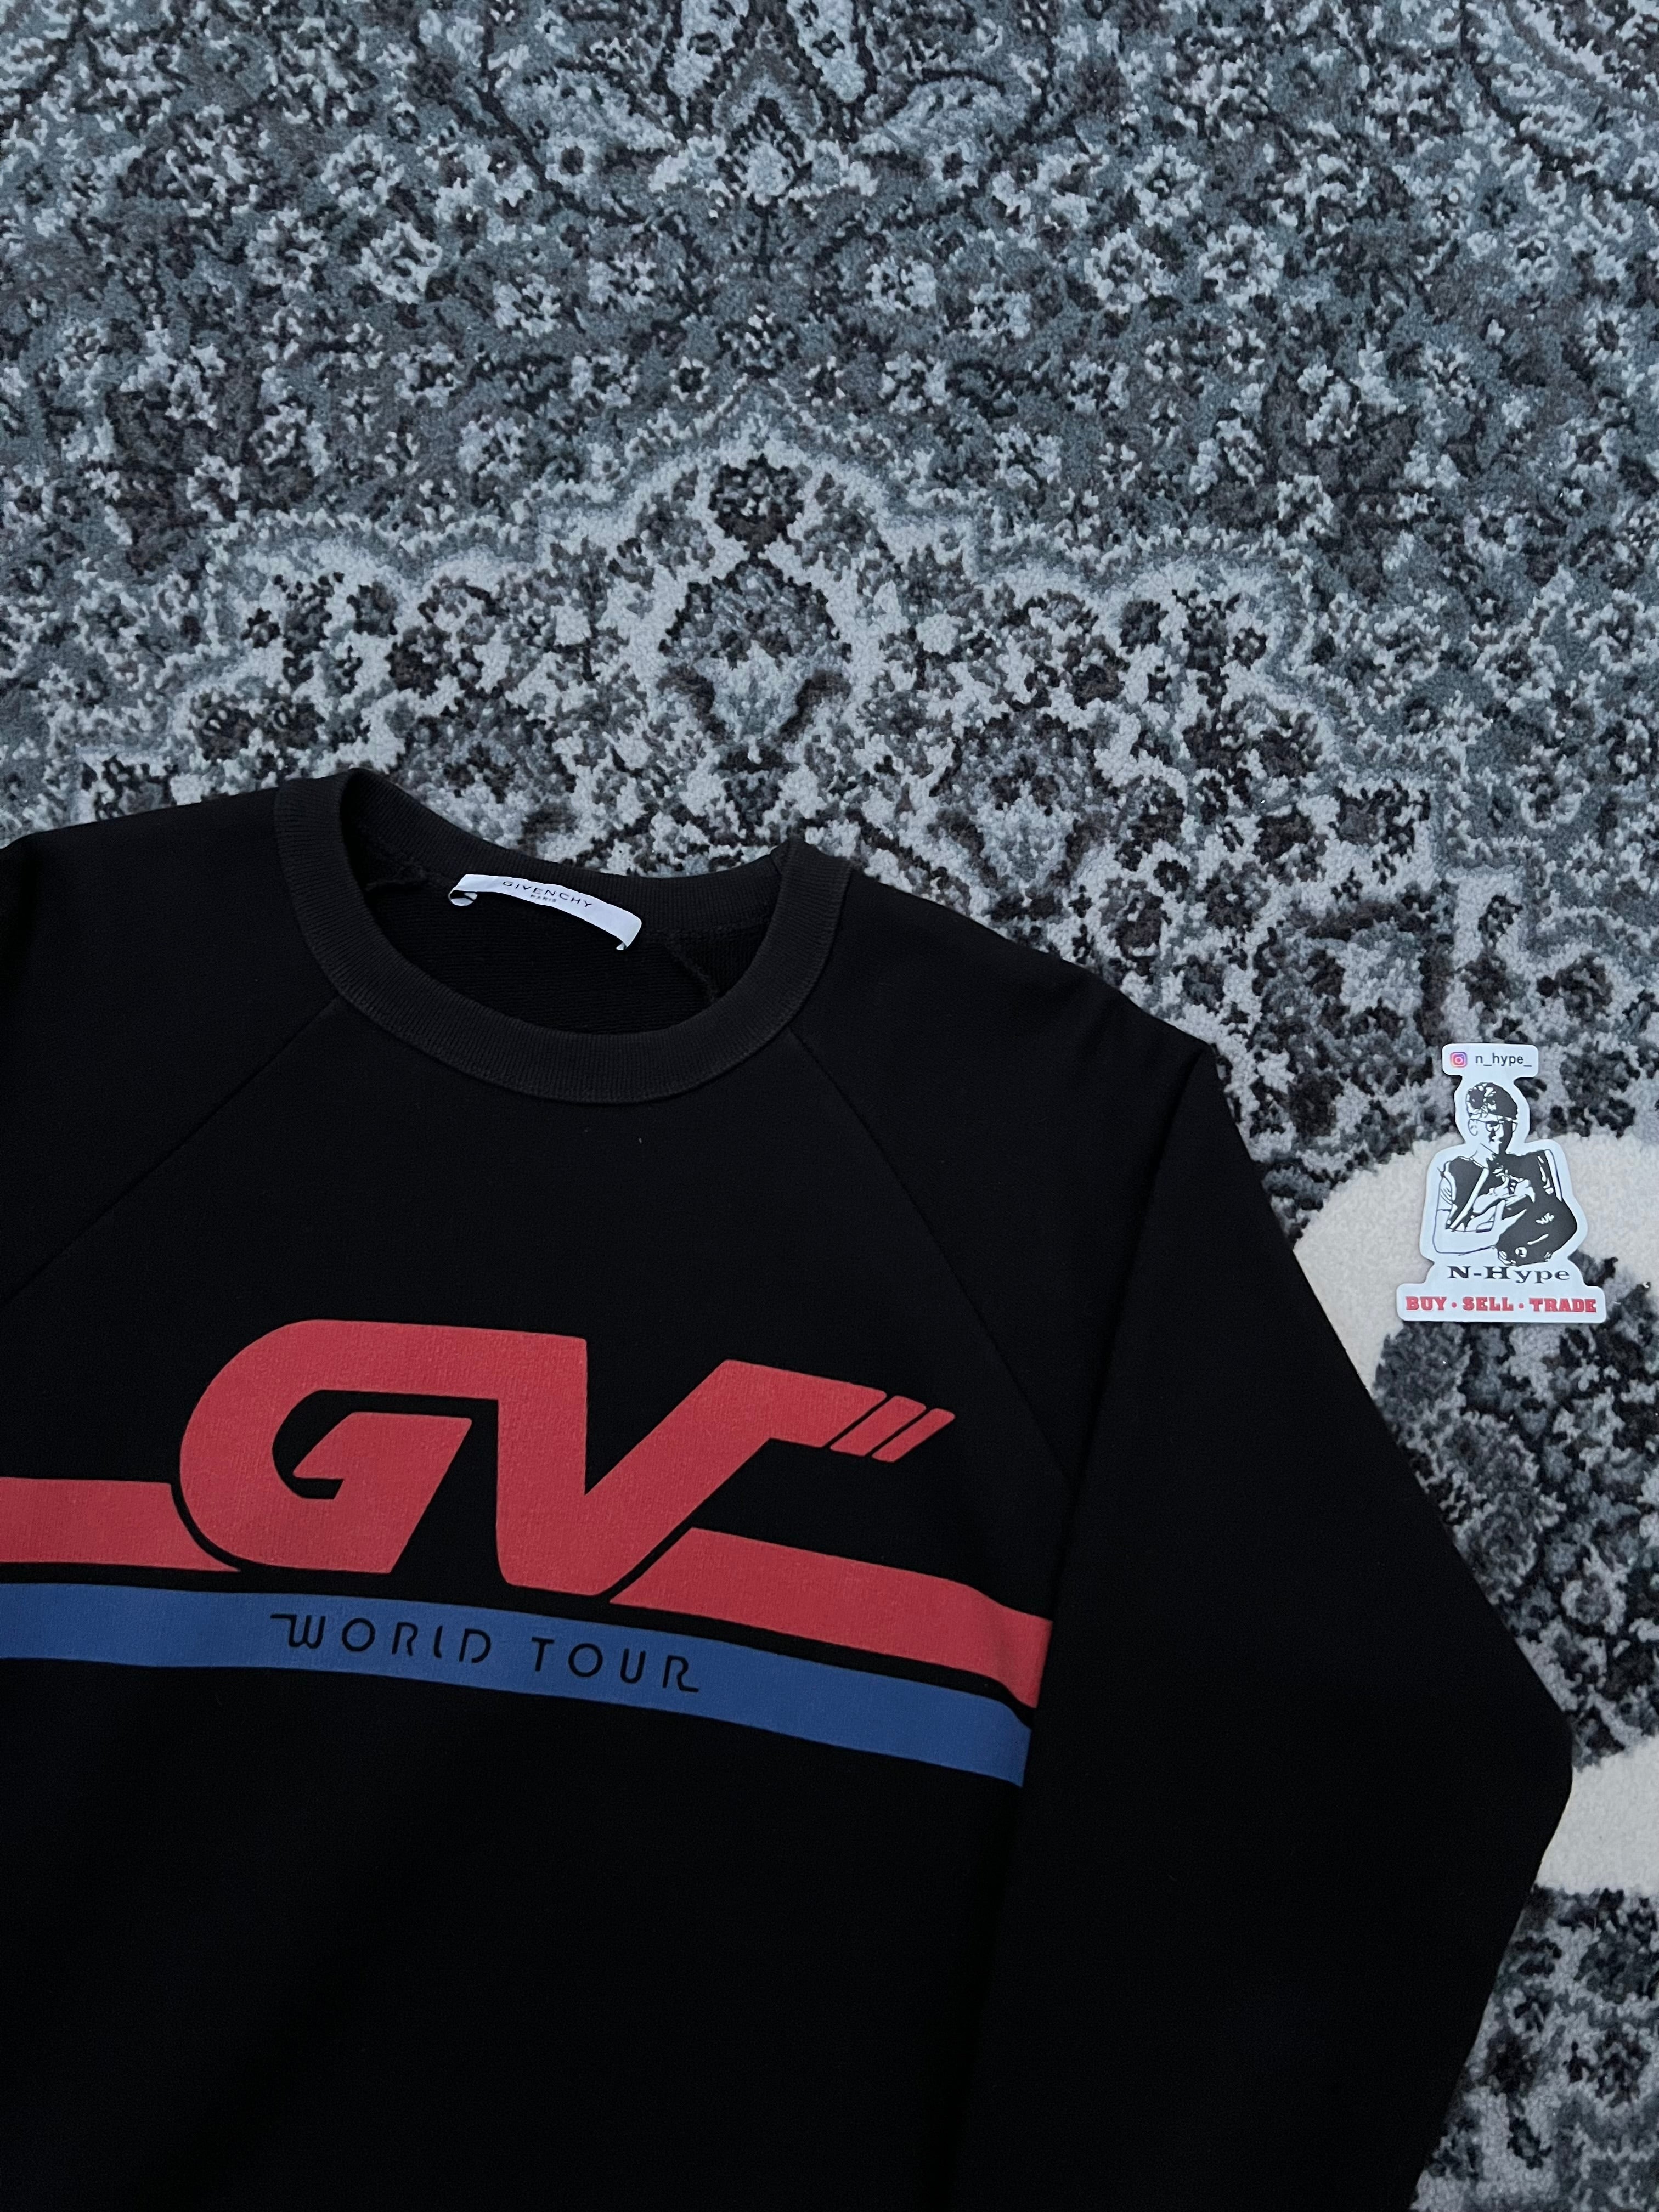 GIVENCHY GV Tour Sweatshirt Black